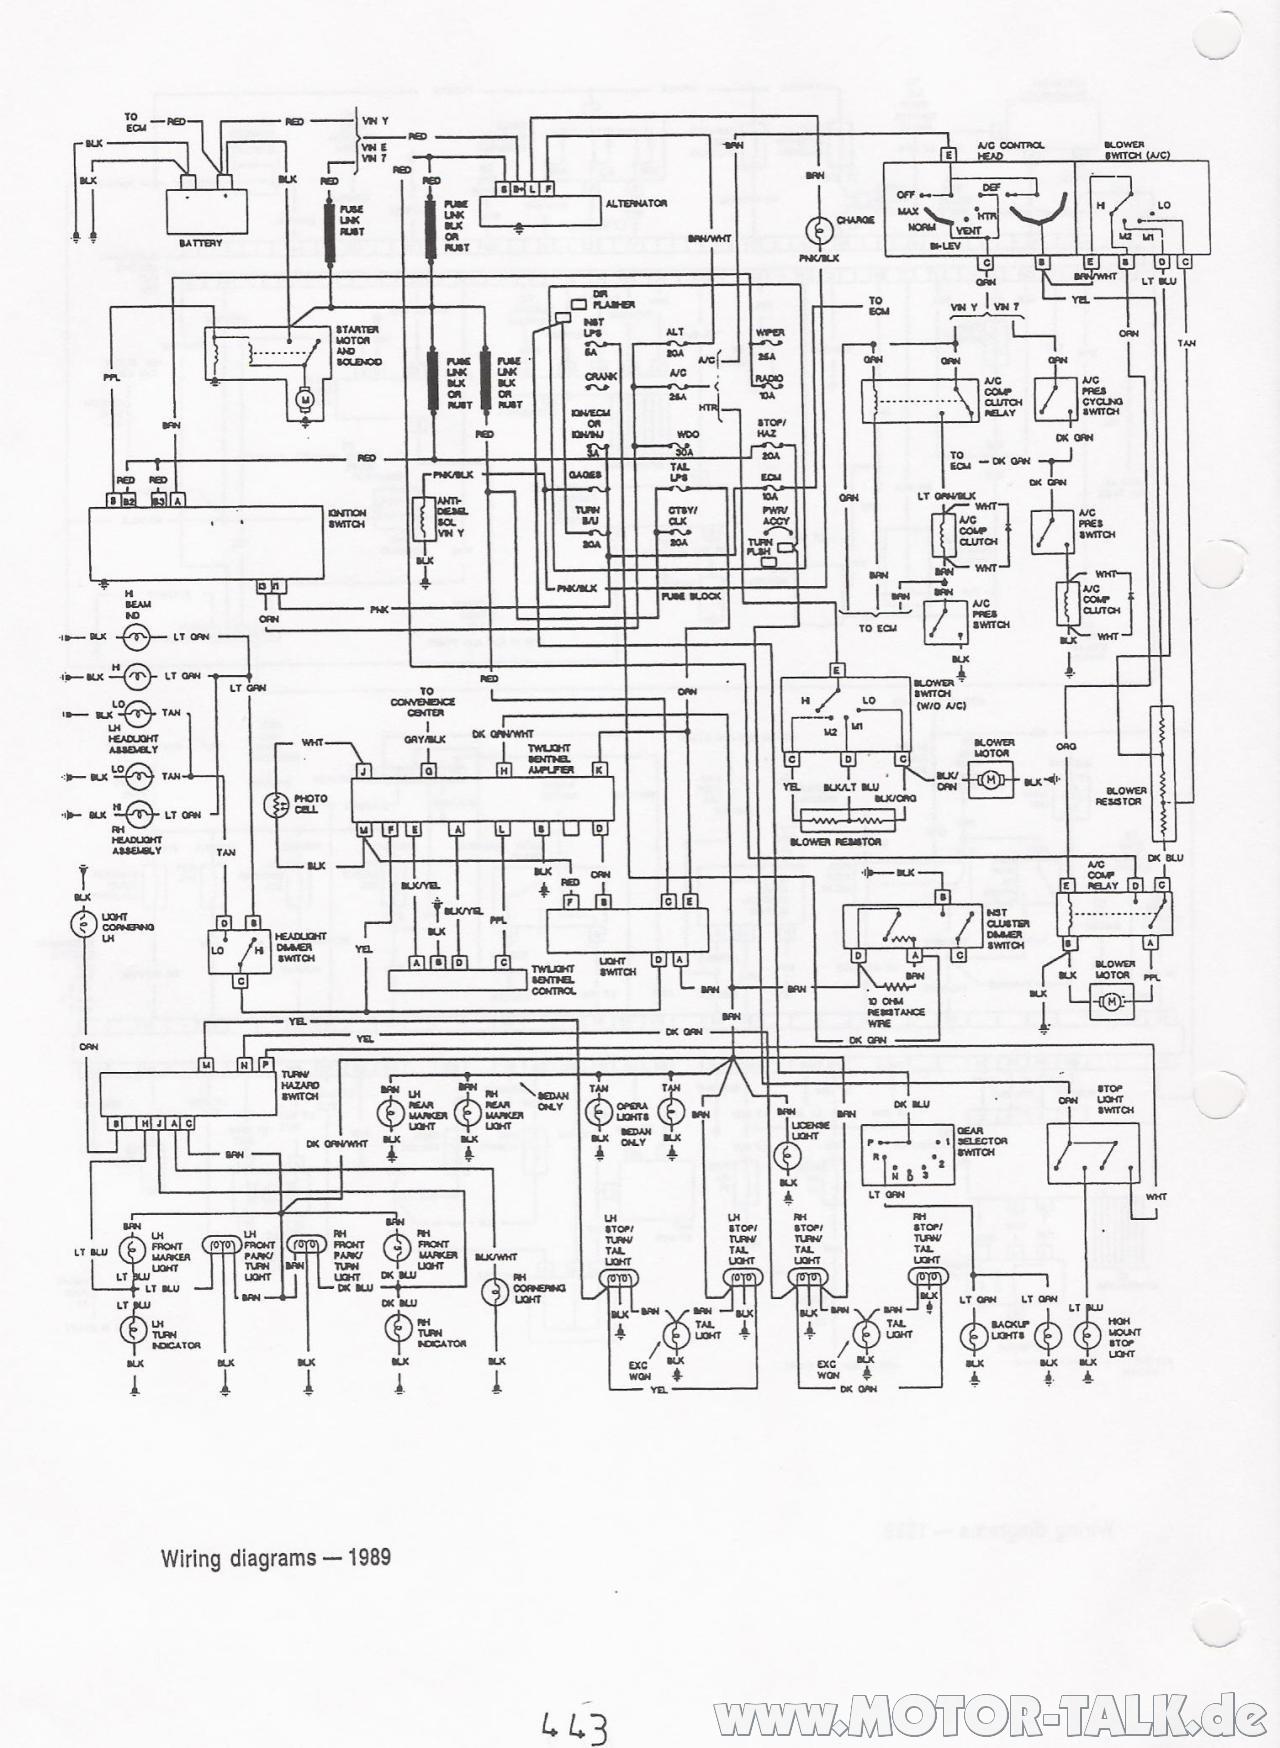 1989 Chevy Silverado Engine Diagram. i 39 m looking for the bracket